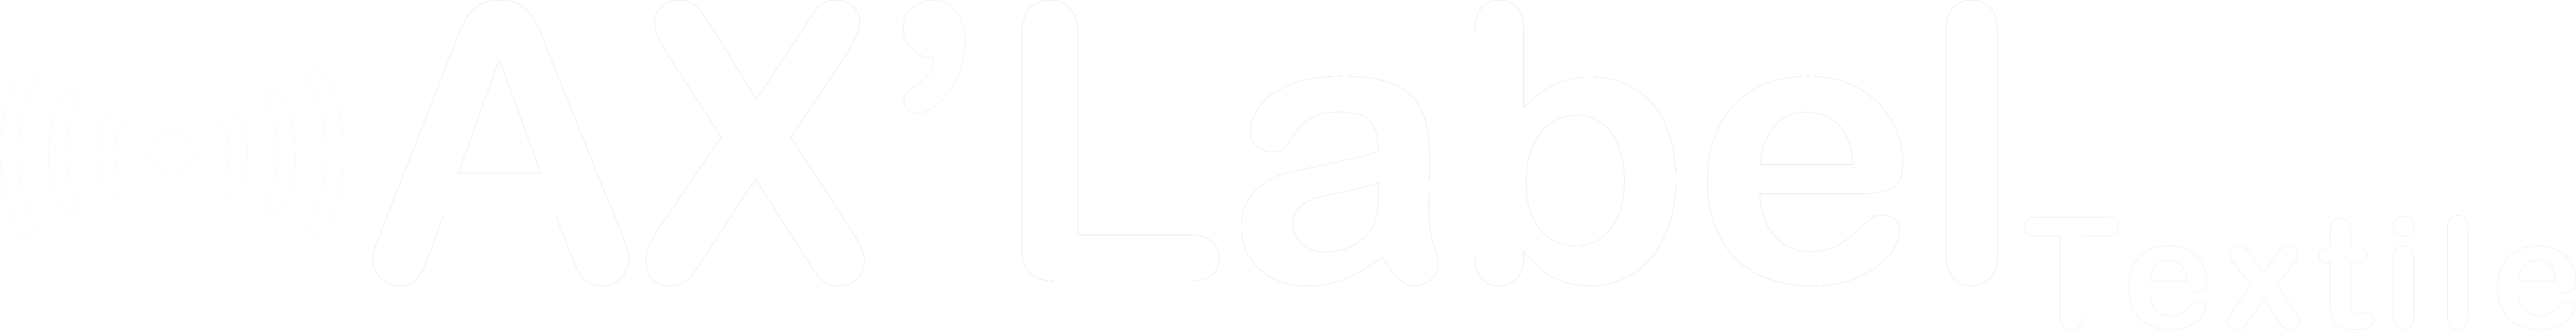 Axlabel Textile Png Logo